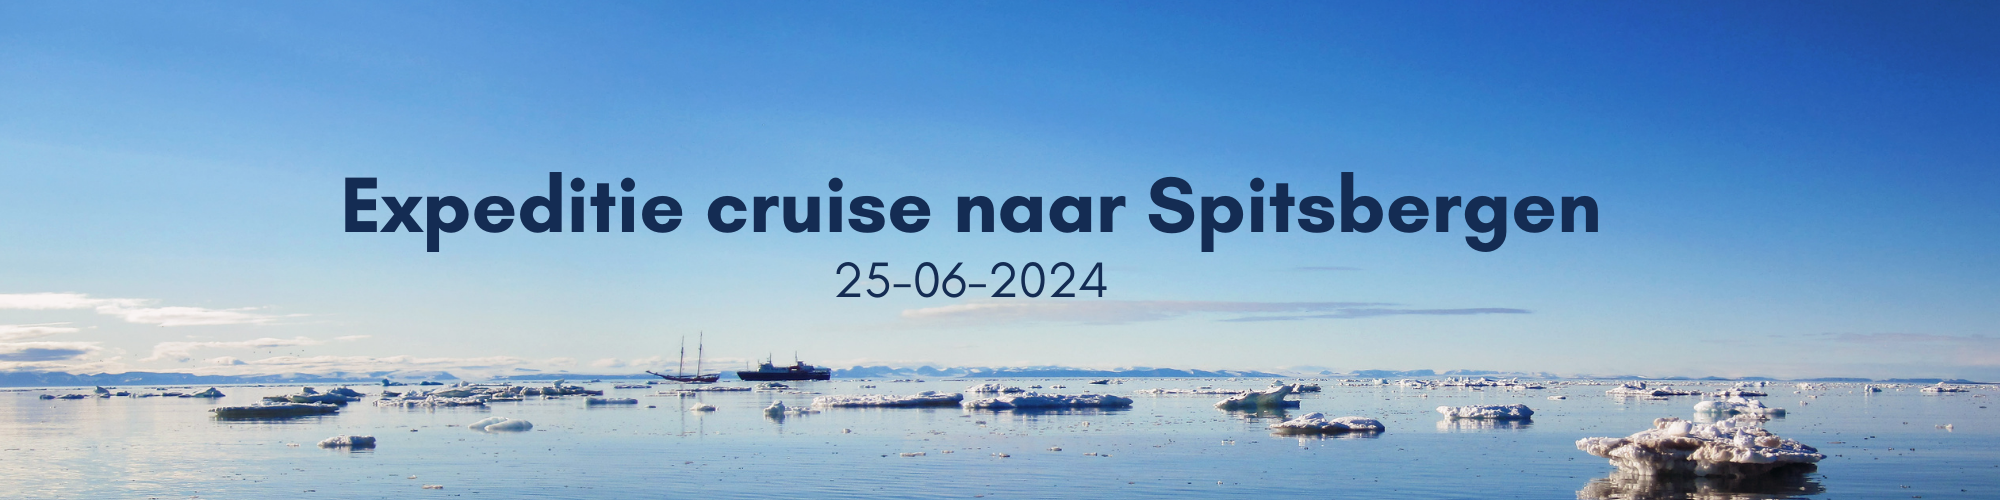 25-06-2024 Expeditie cruise Spitsbergen Hapag Lloyd